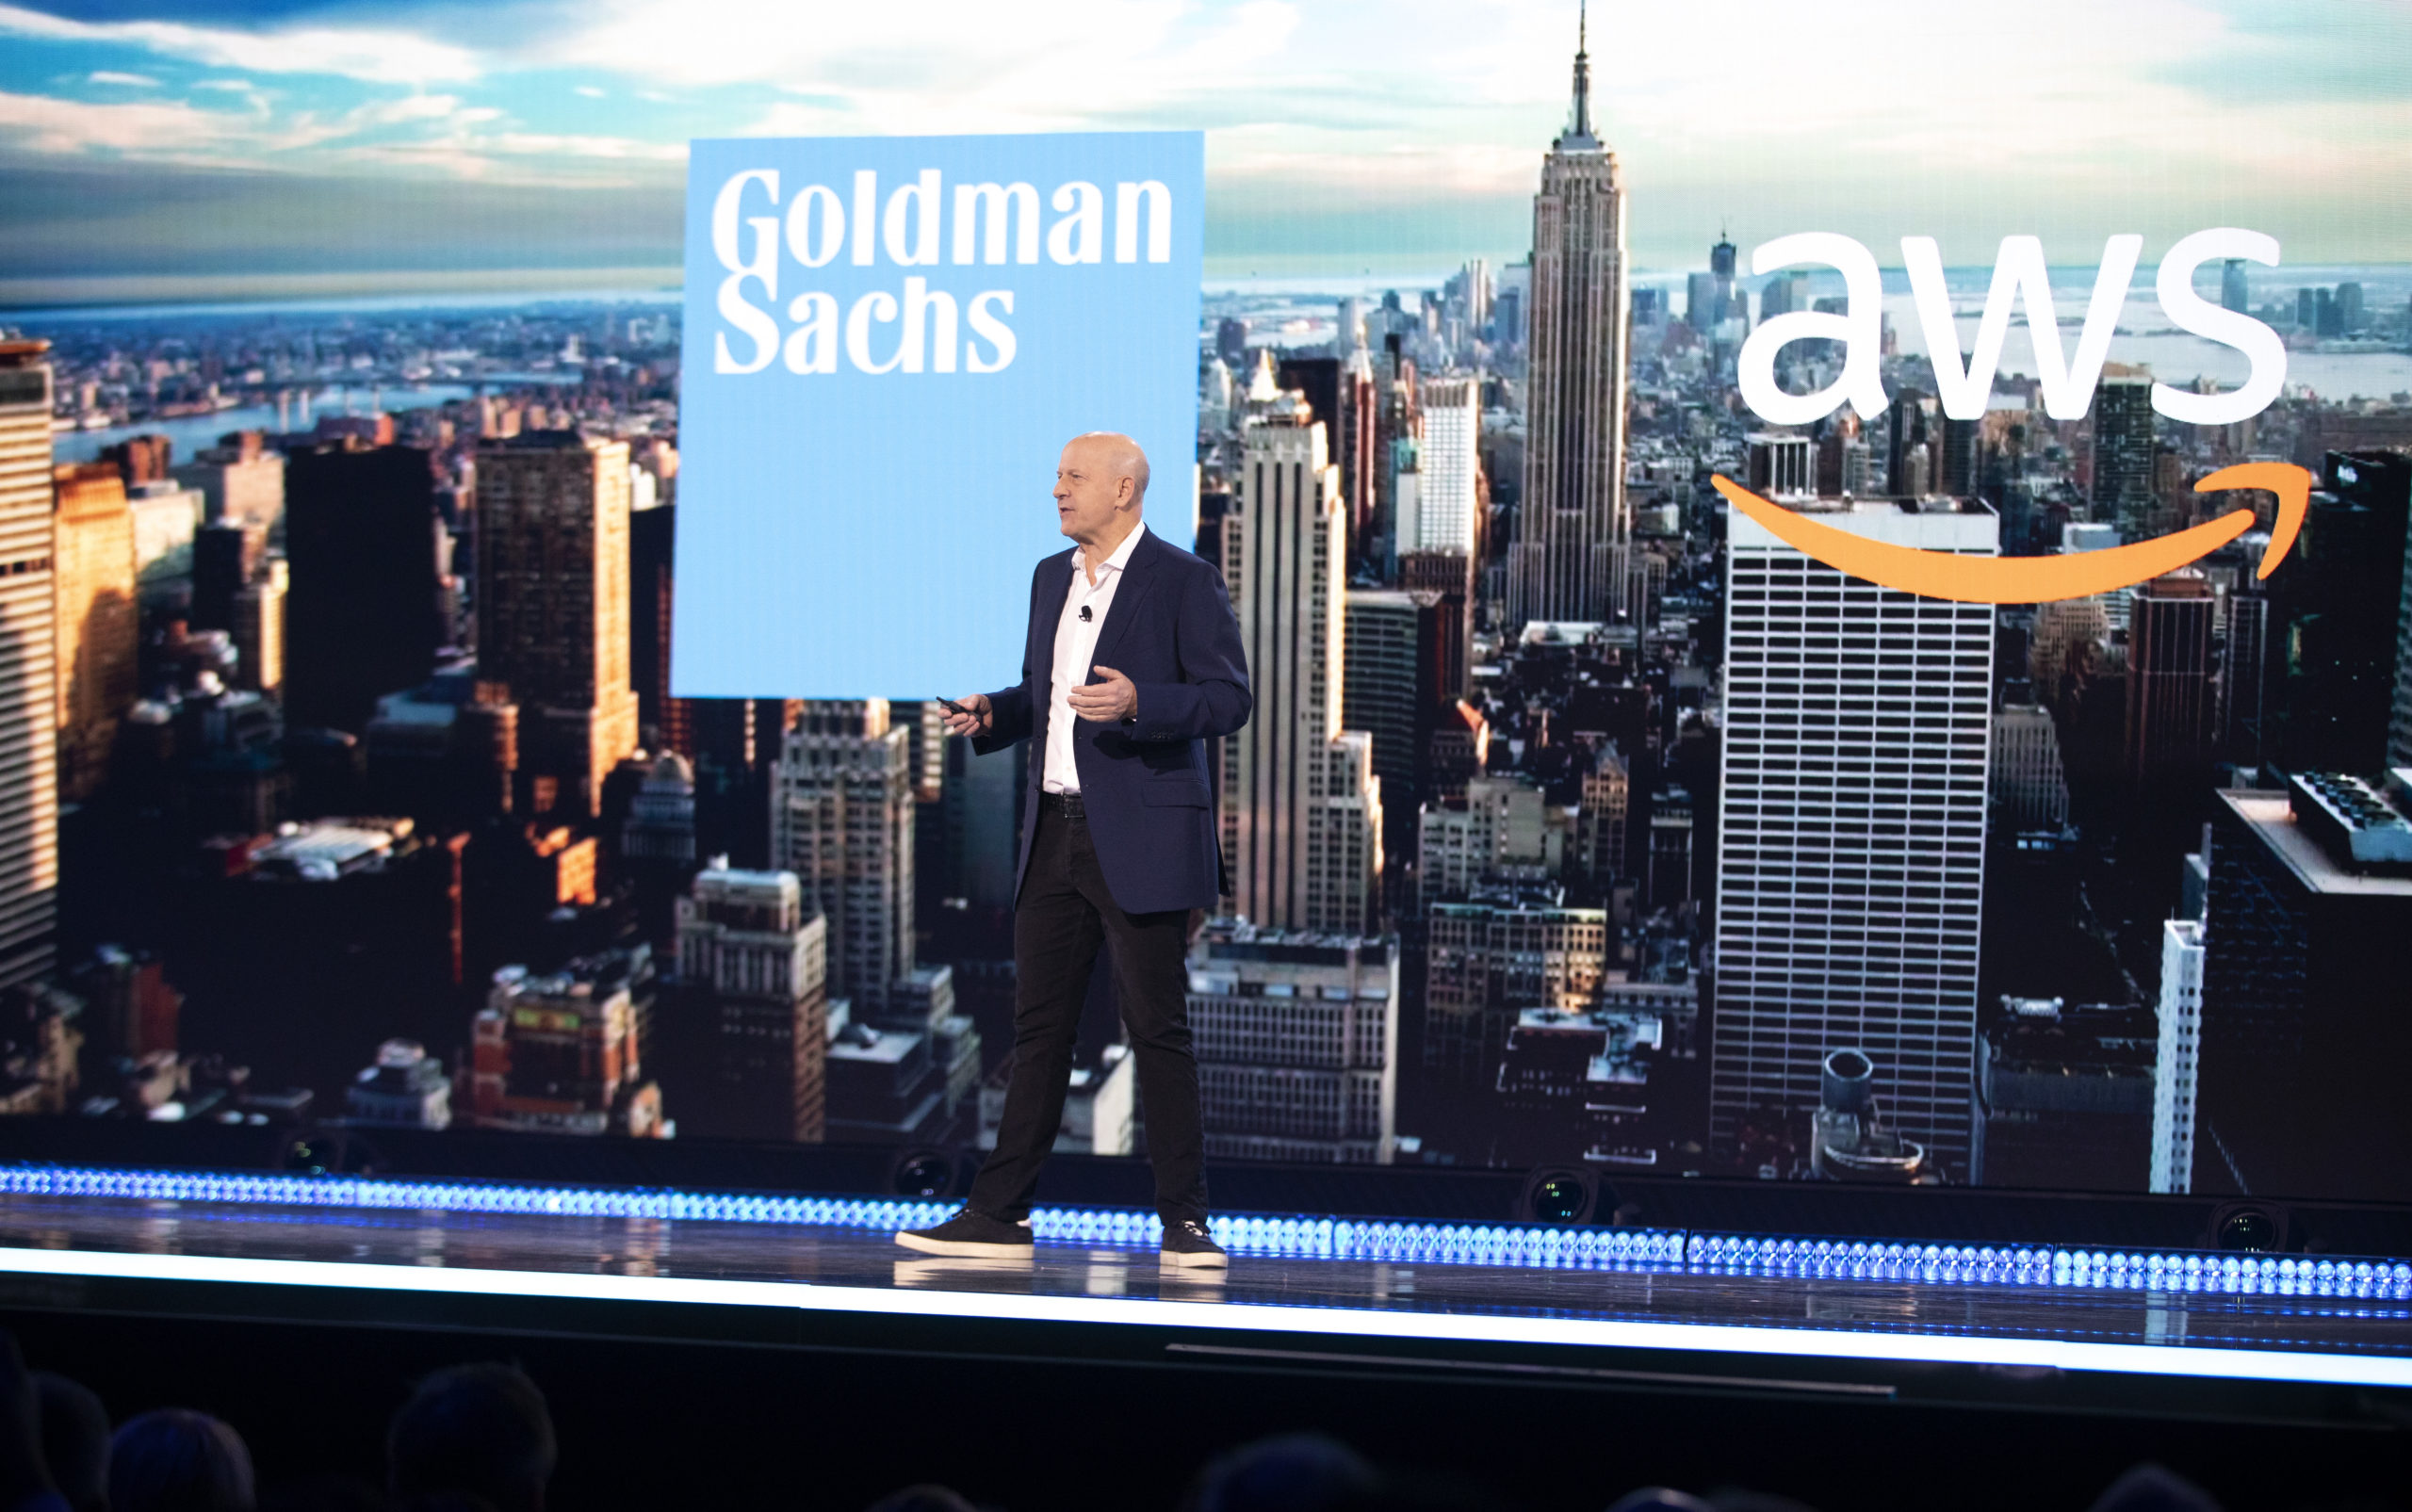 Goldman Sachs CEO David Solomon speaks about technology at AWS Reinvent 2019